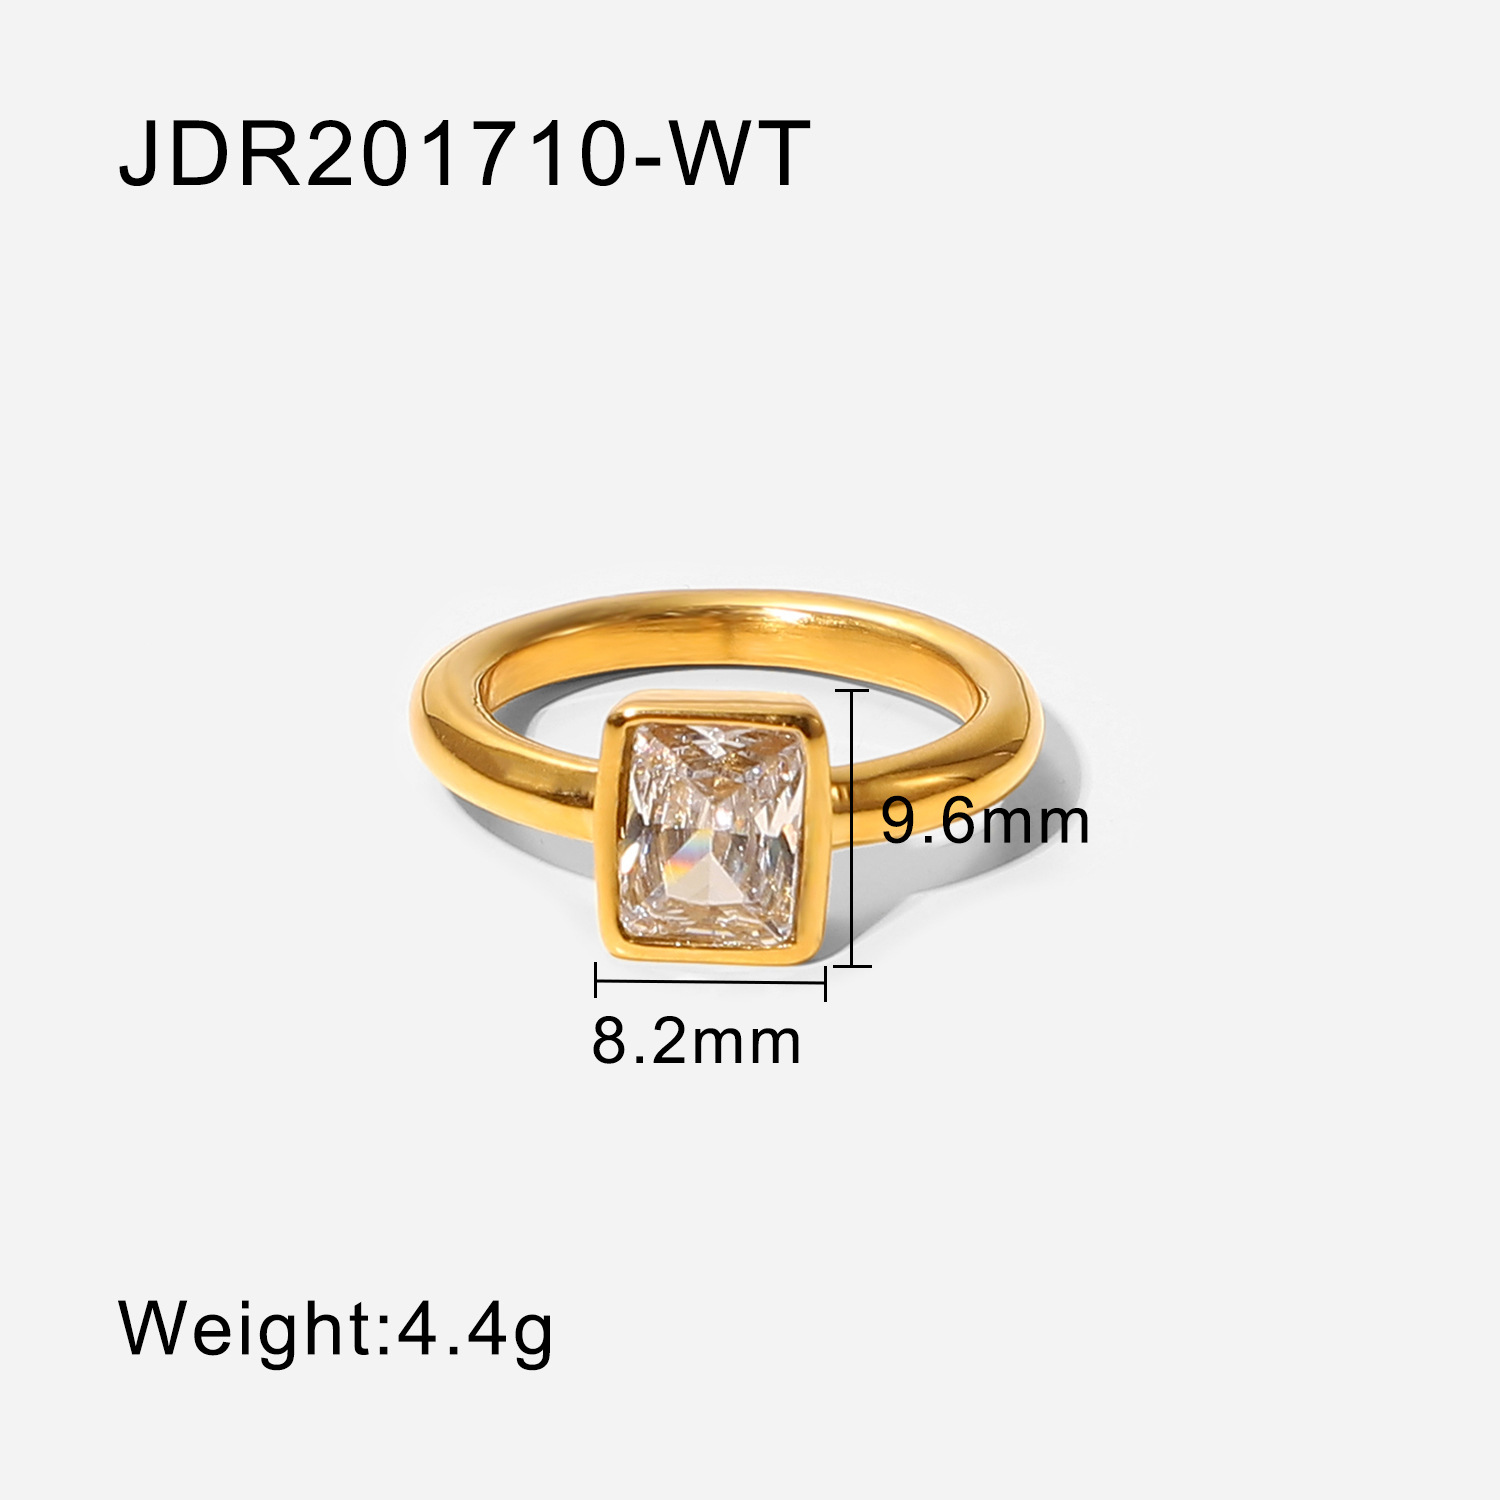 JDR201710-WT No.8